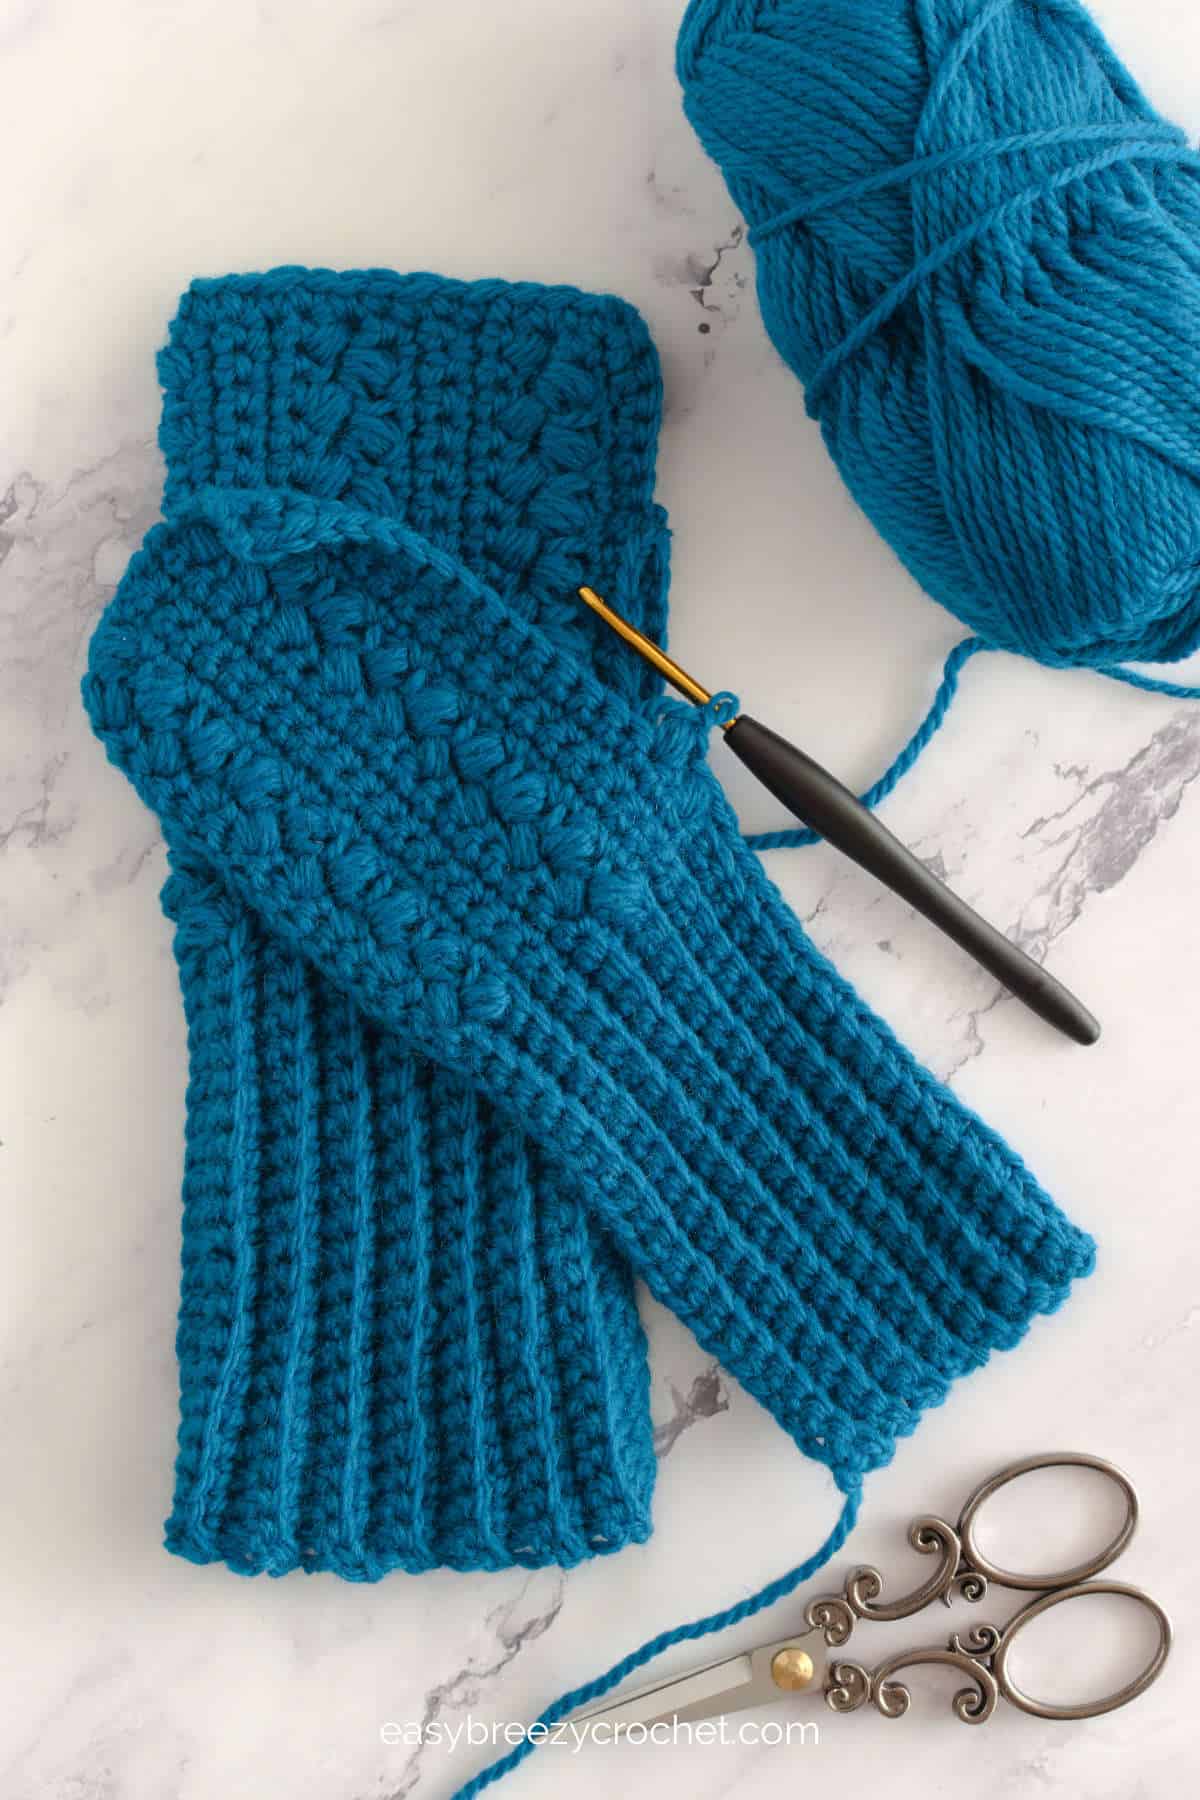 Image showing a work in progress of crochet fingerless gloves.